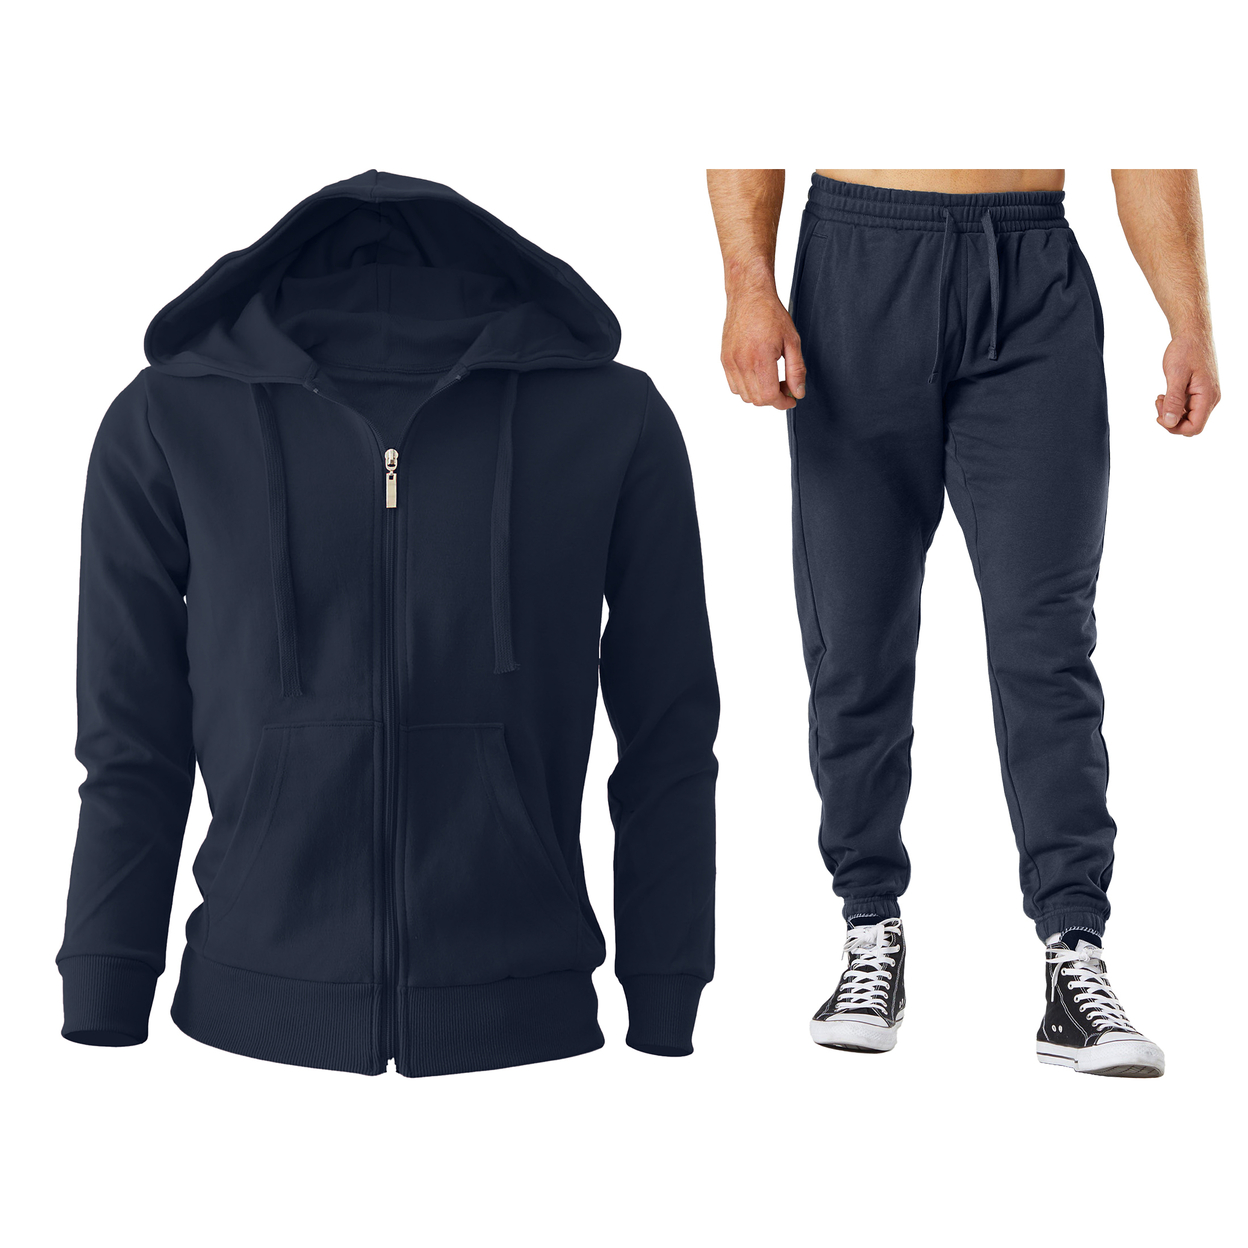 2/4-Piece: Men's Winter Warm Cozy Athletic Multi-Pockets BIG & TALL Sweatsuit Set - Charcoal, 1, Medium